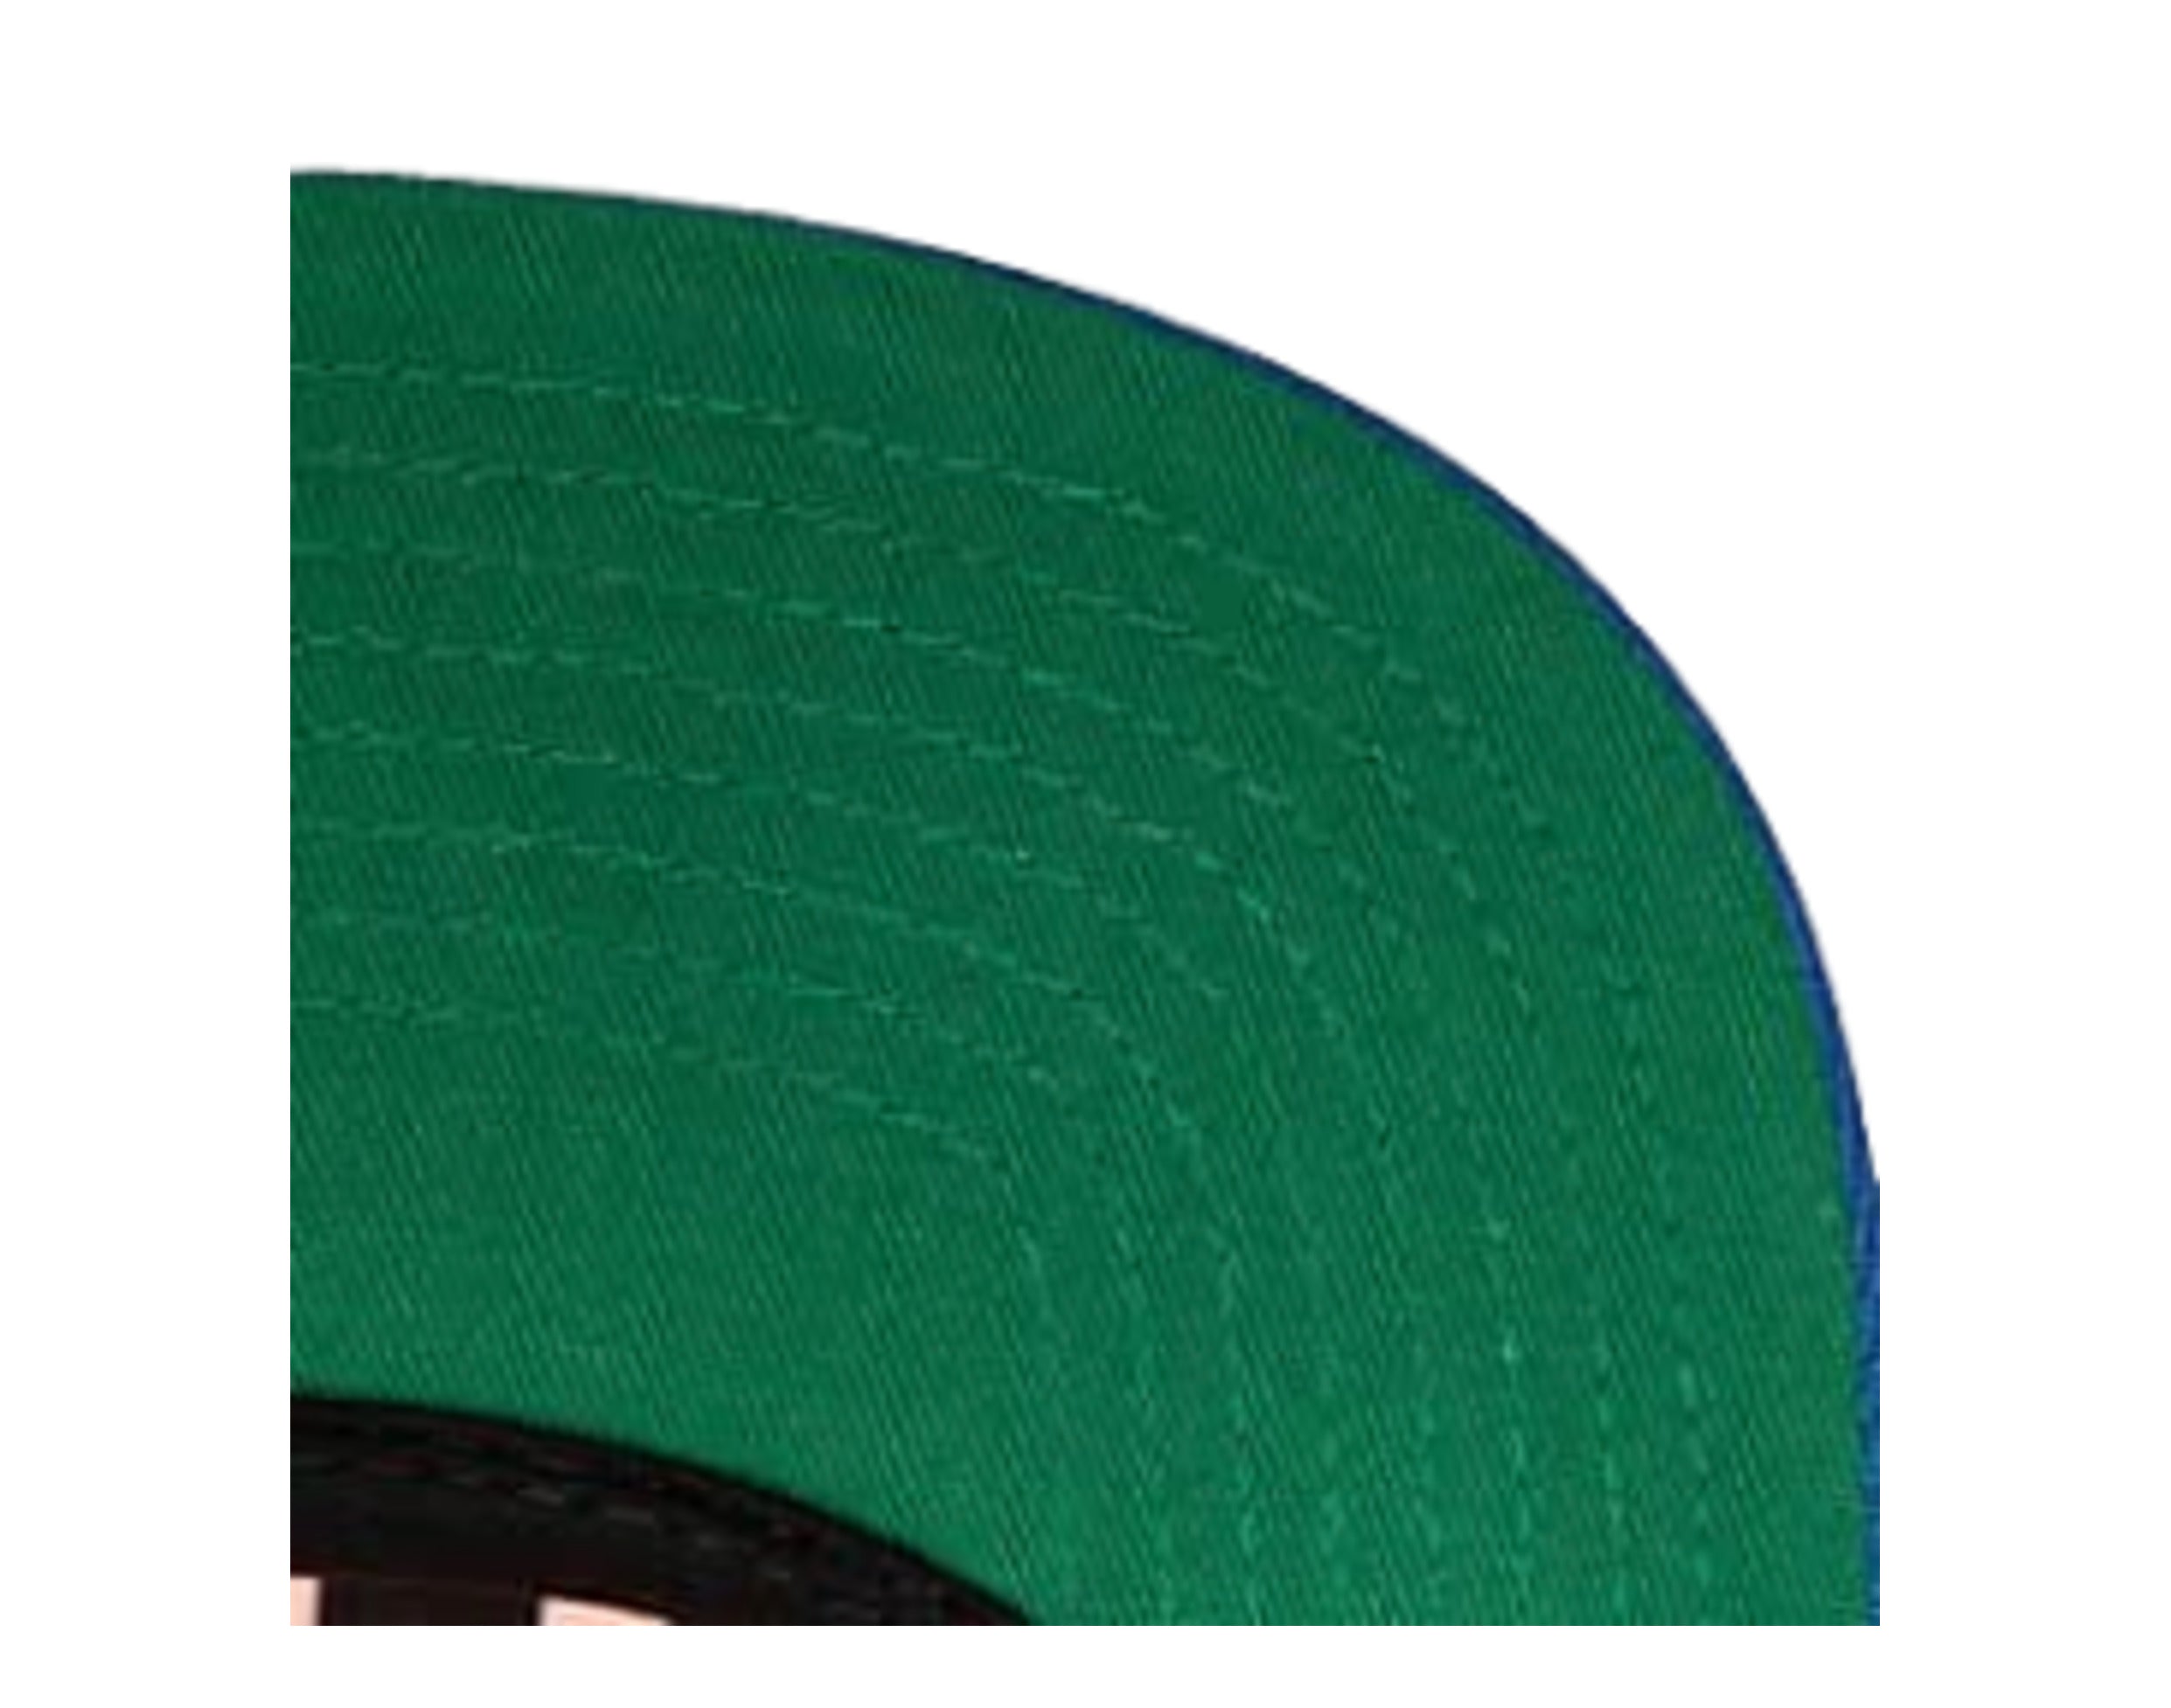 Mitchell & Ness Minnesota Timberwolves All Star Color Snapback Hat Adjustable Cap HWC - Royal/Green